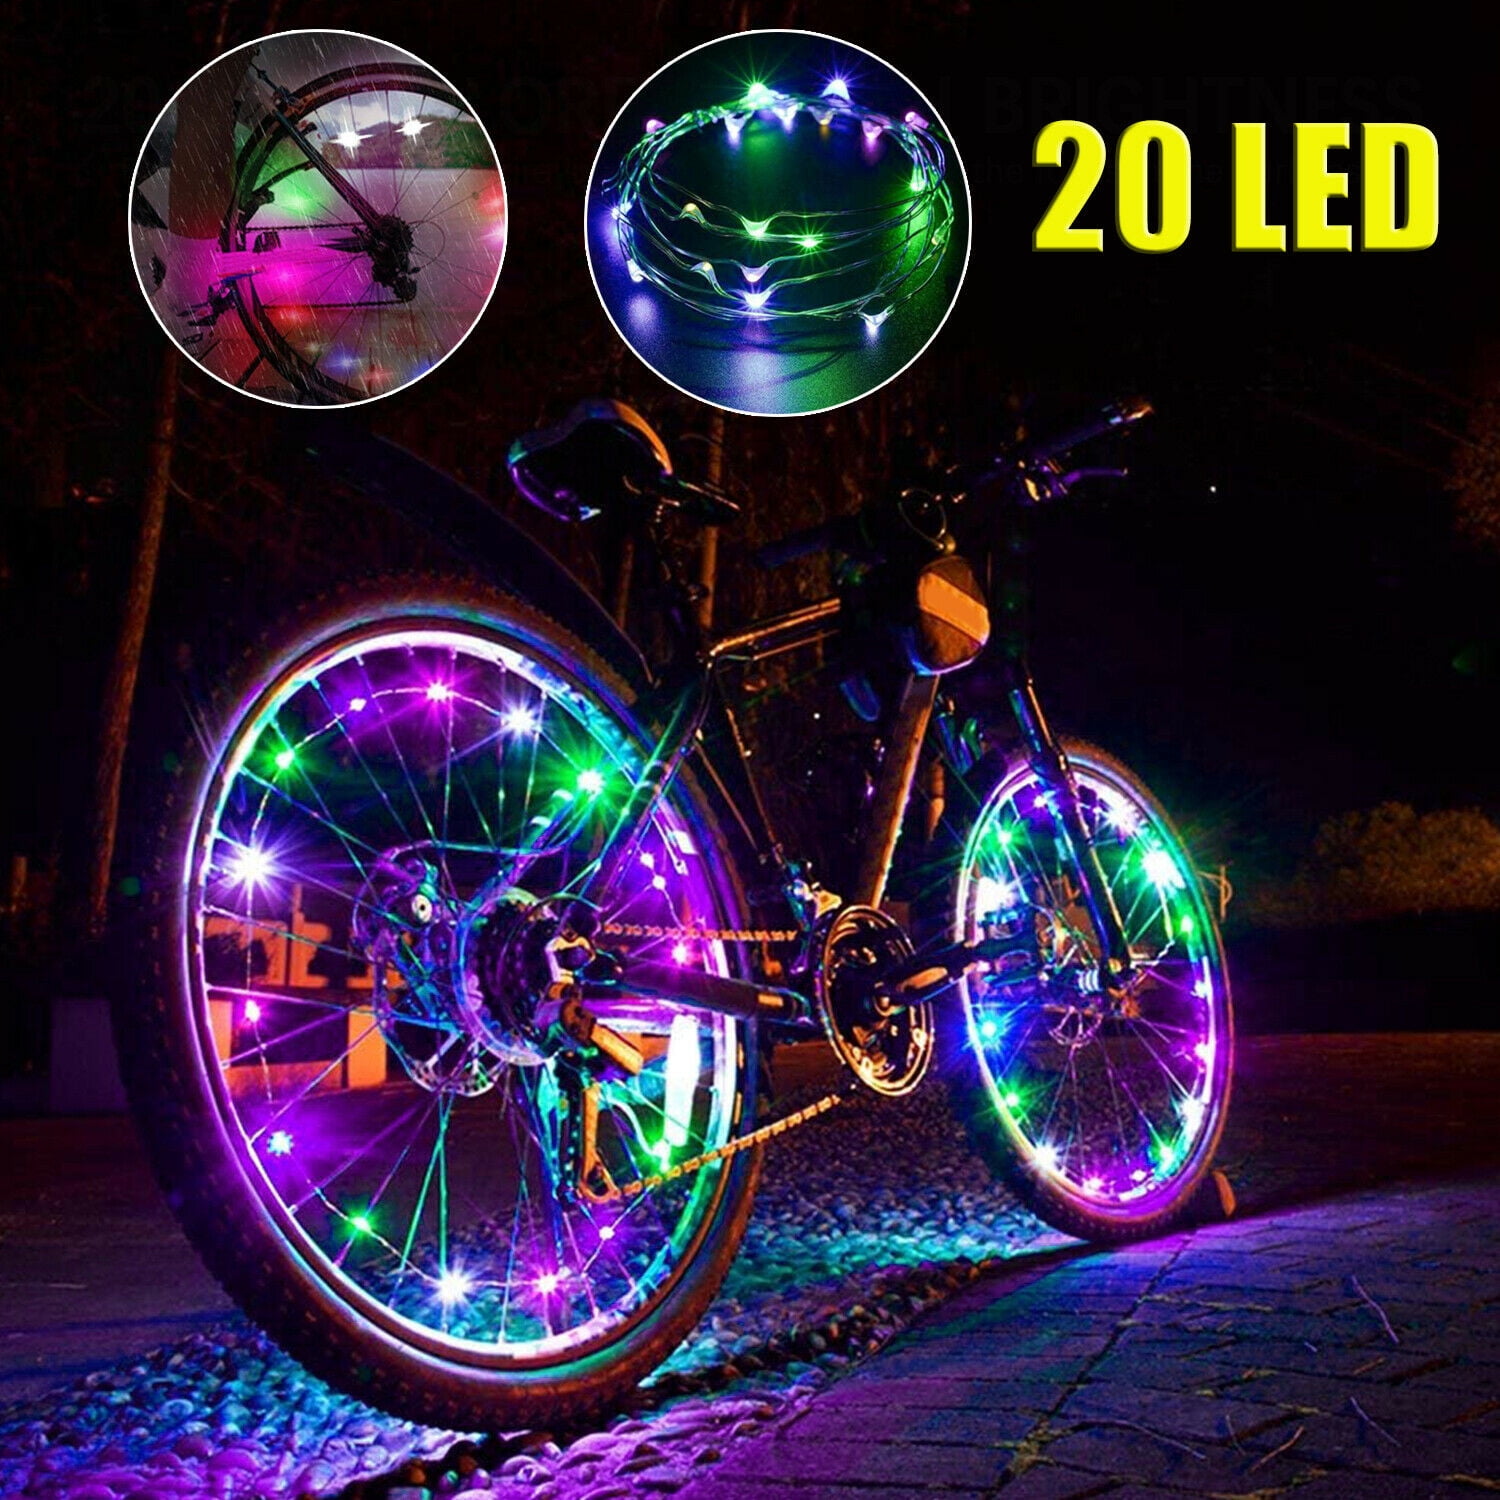 Led Bike Wheel Lights -Waterproof Bright Bicycle Light Strip (2M), Safety Spoke Lights, Cool Kids Bike Accessories, Light Up Wheels, Lightweight